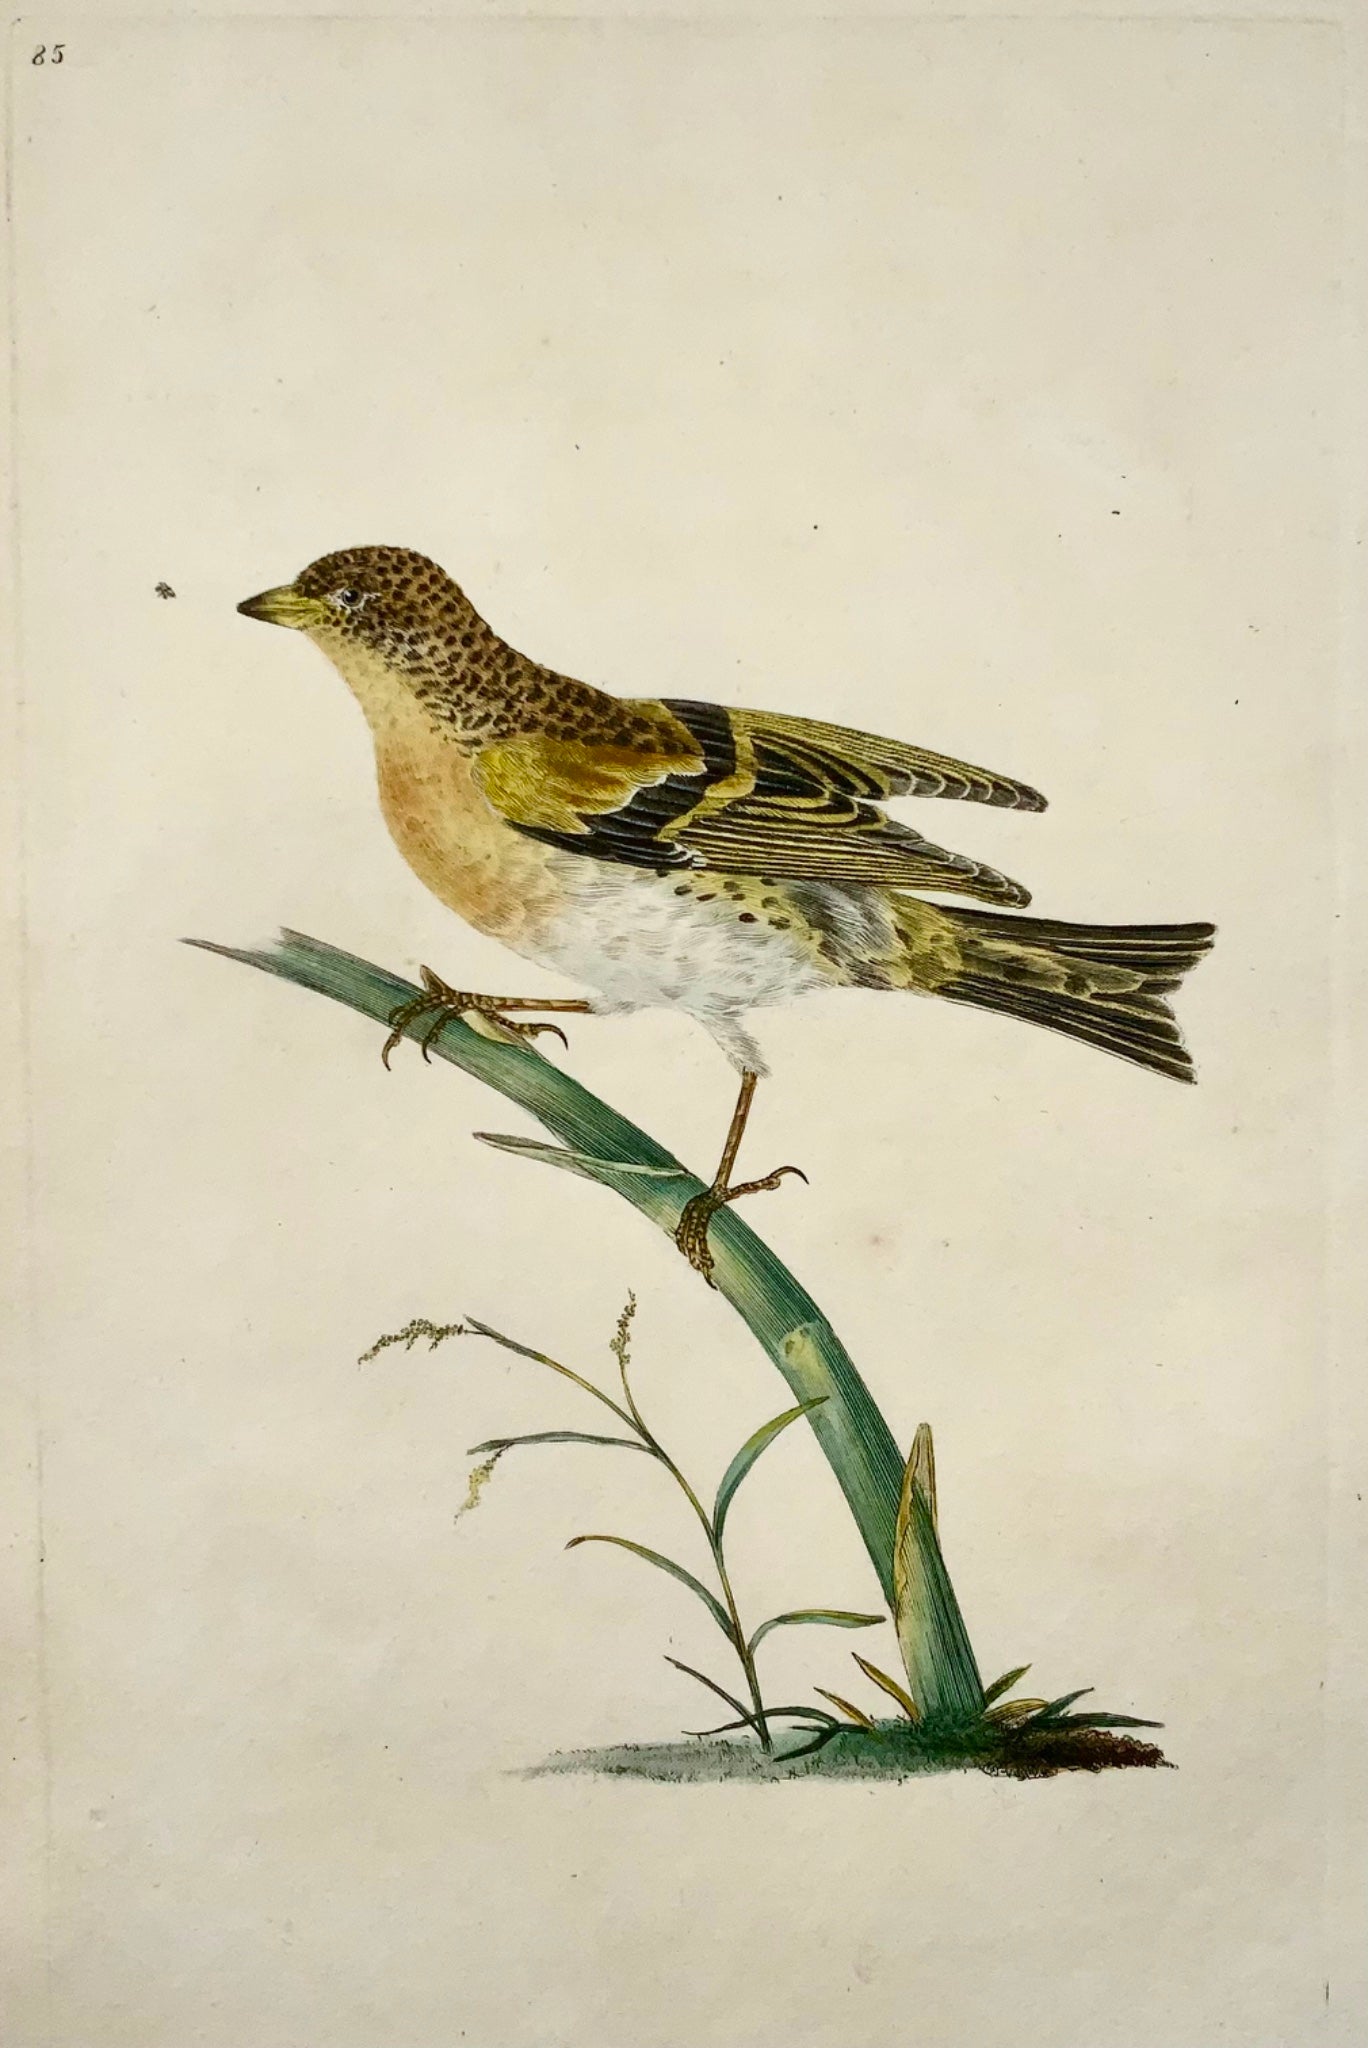 1794 Edward Donovan, Brambling, ornithology, fine hand coloured engraving